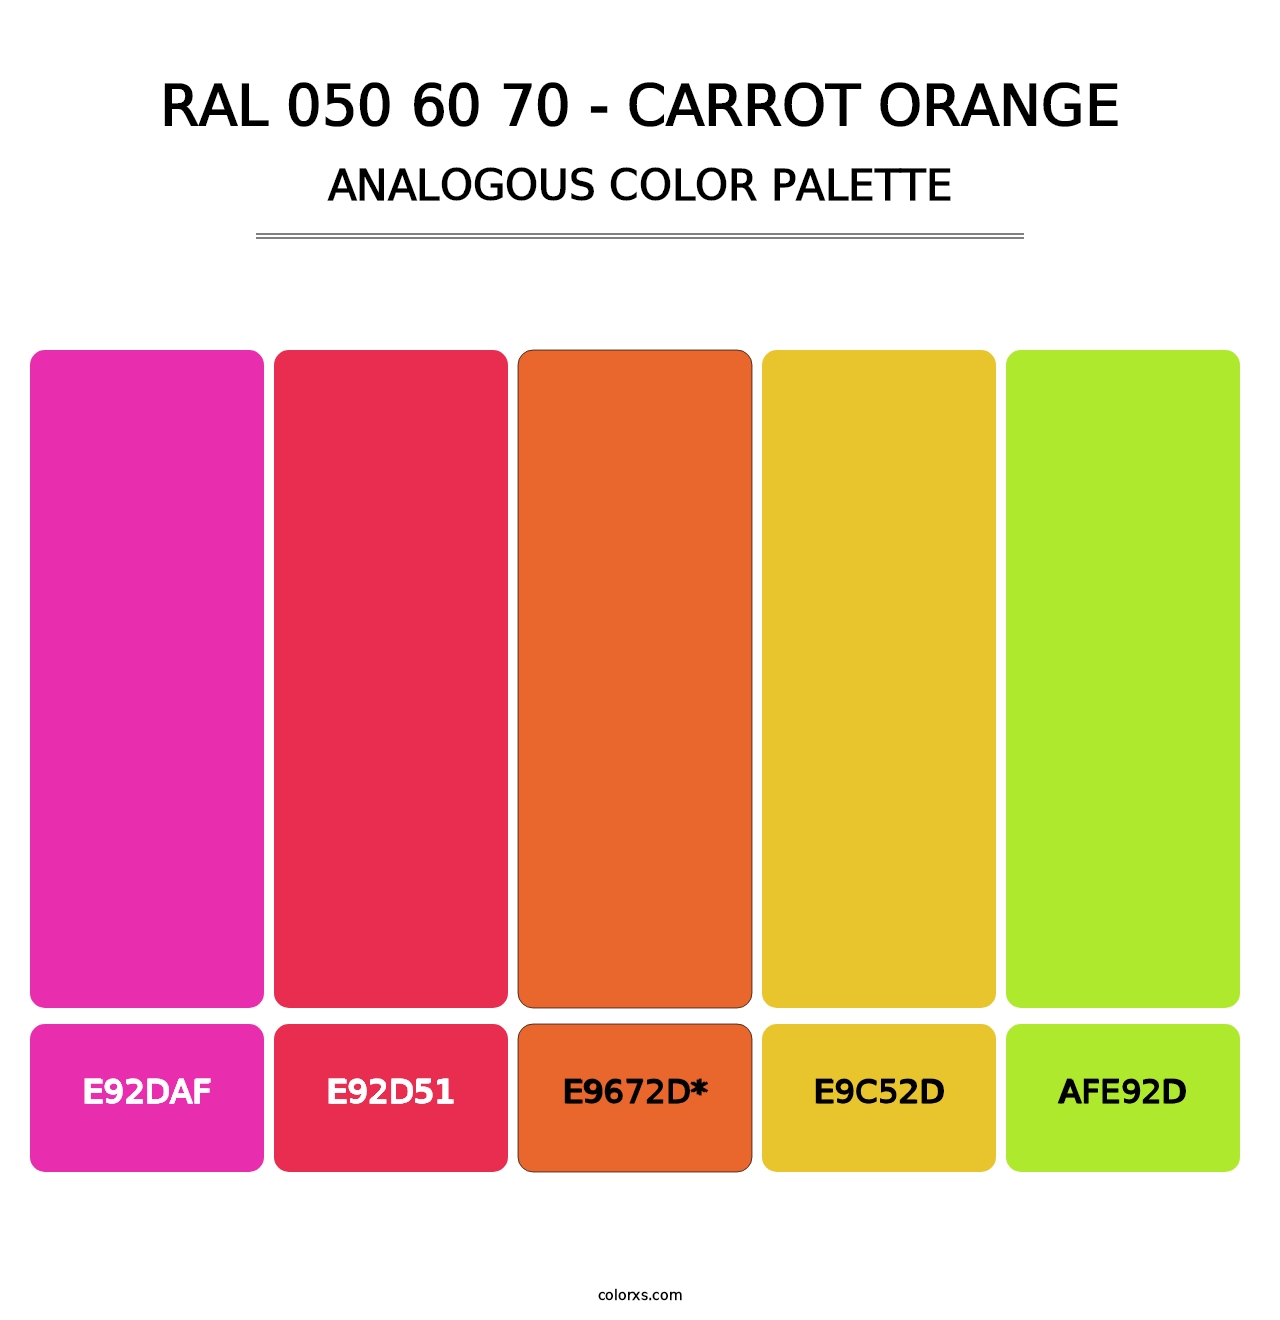 RAL 050 60 70 - Carrot Orange - Analogous Color Palette